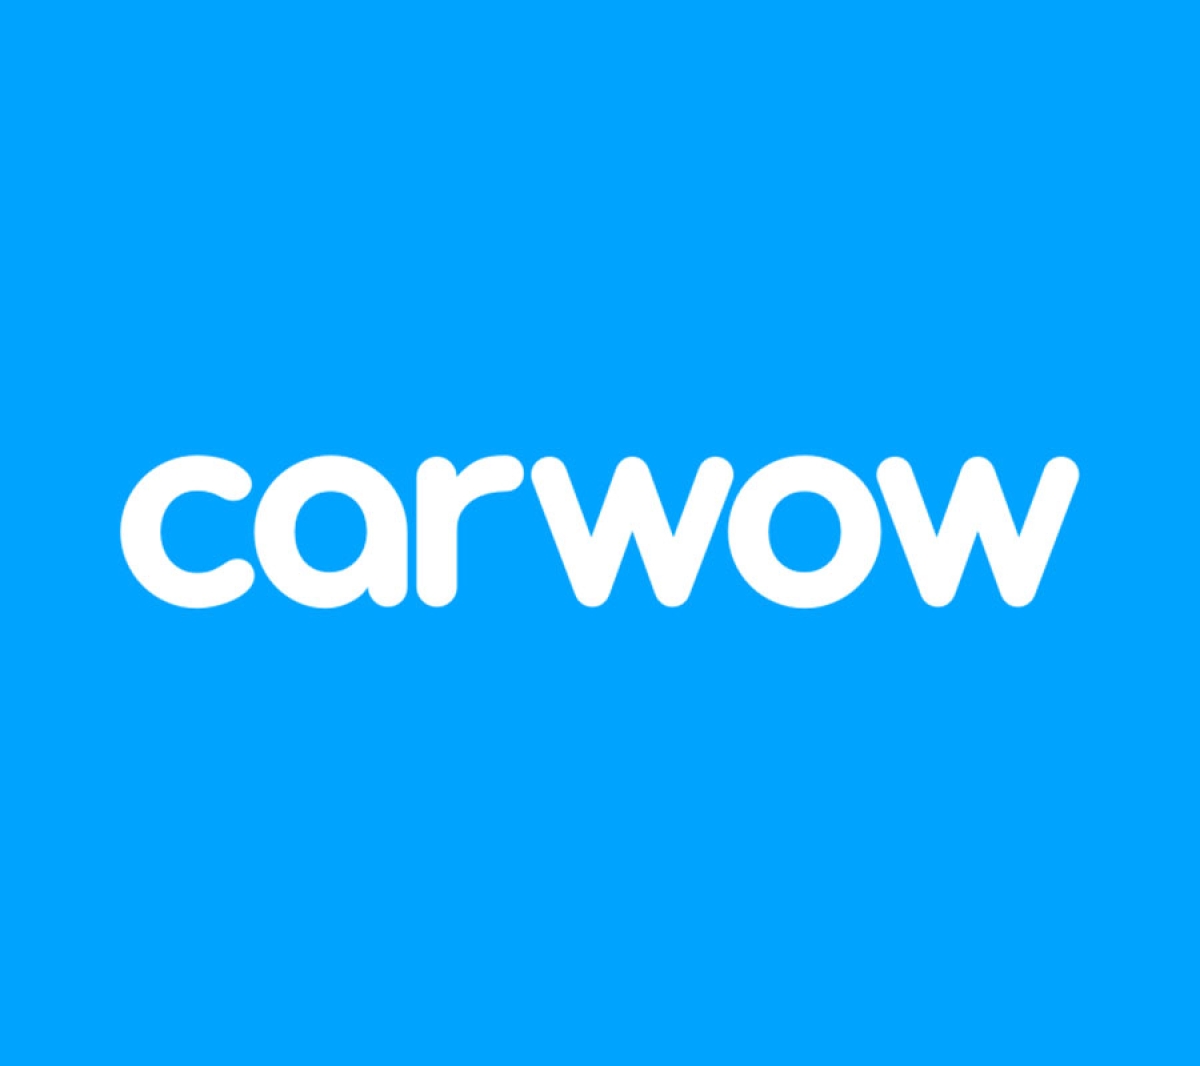 Carwow-logo-case-study-advent-calendar